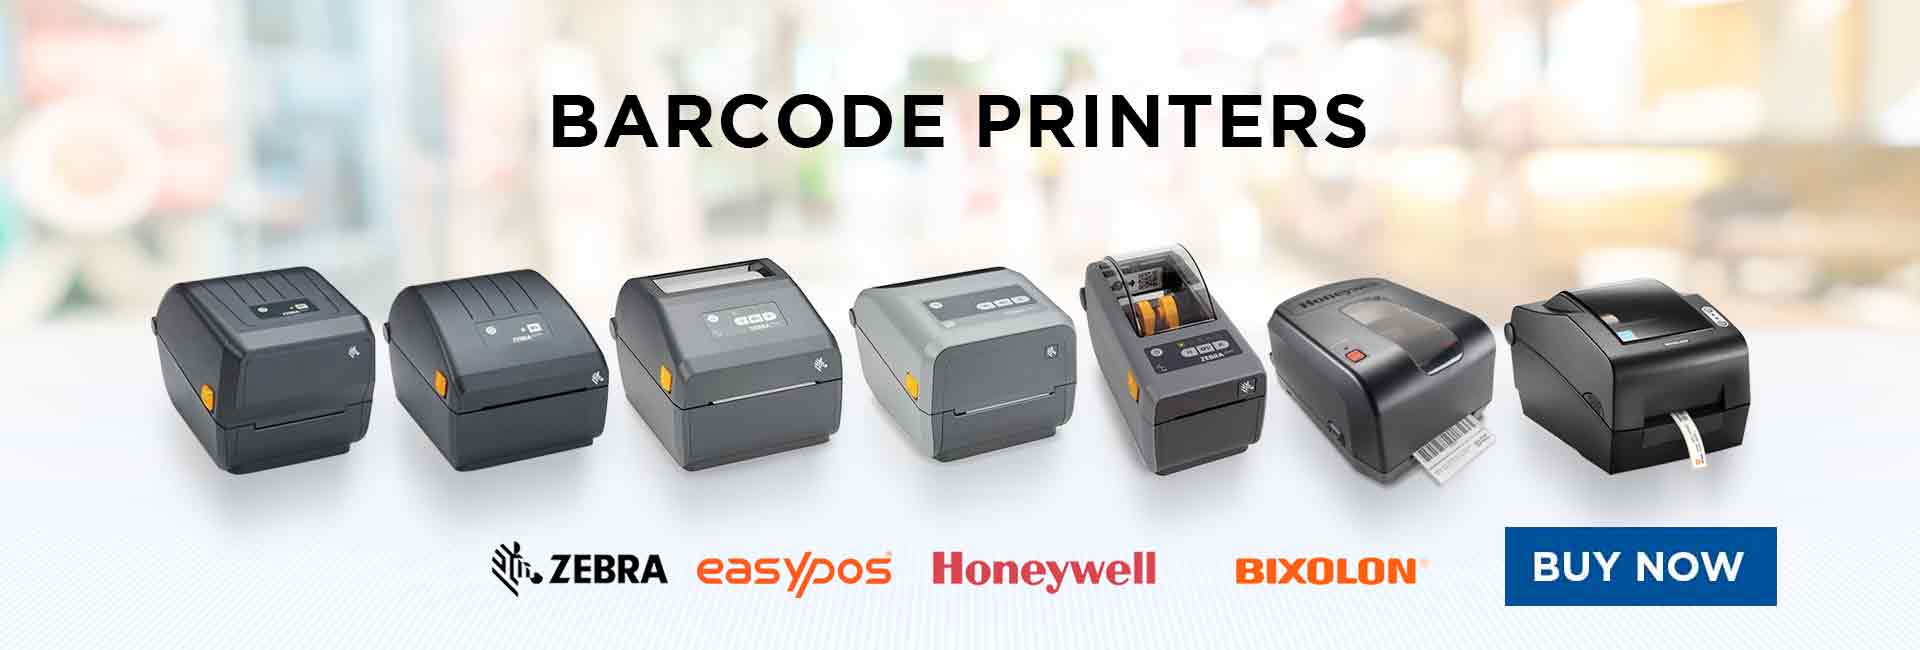 barcode printers